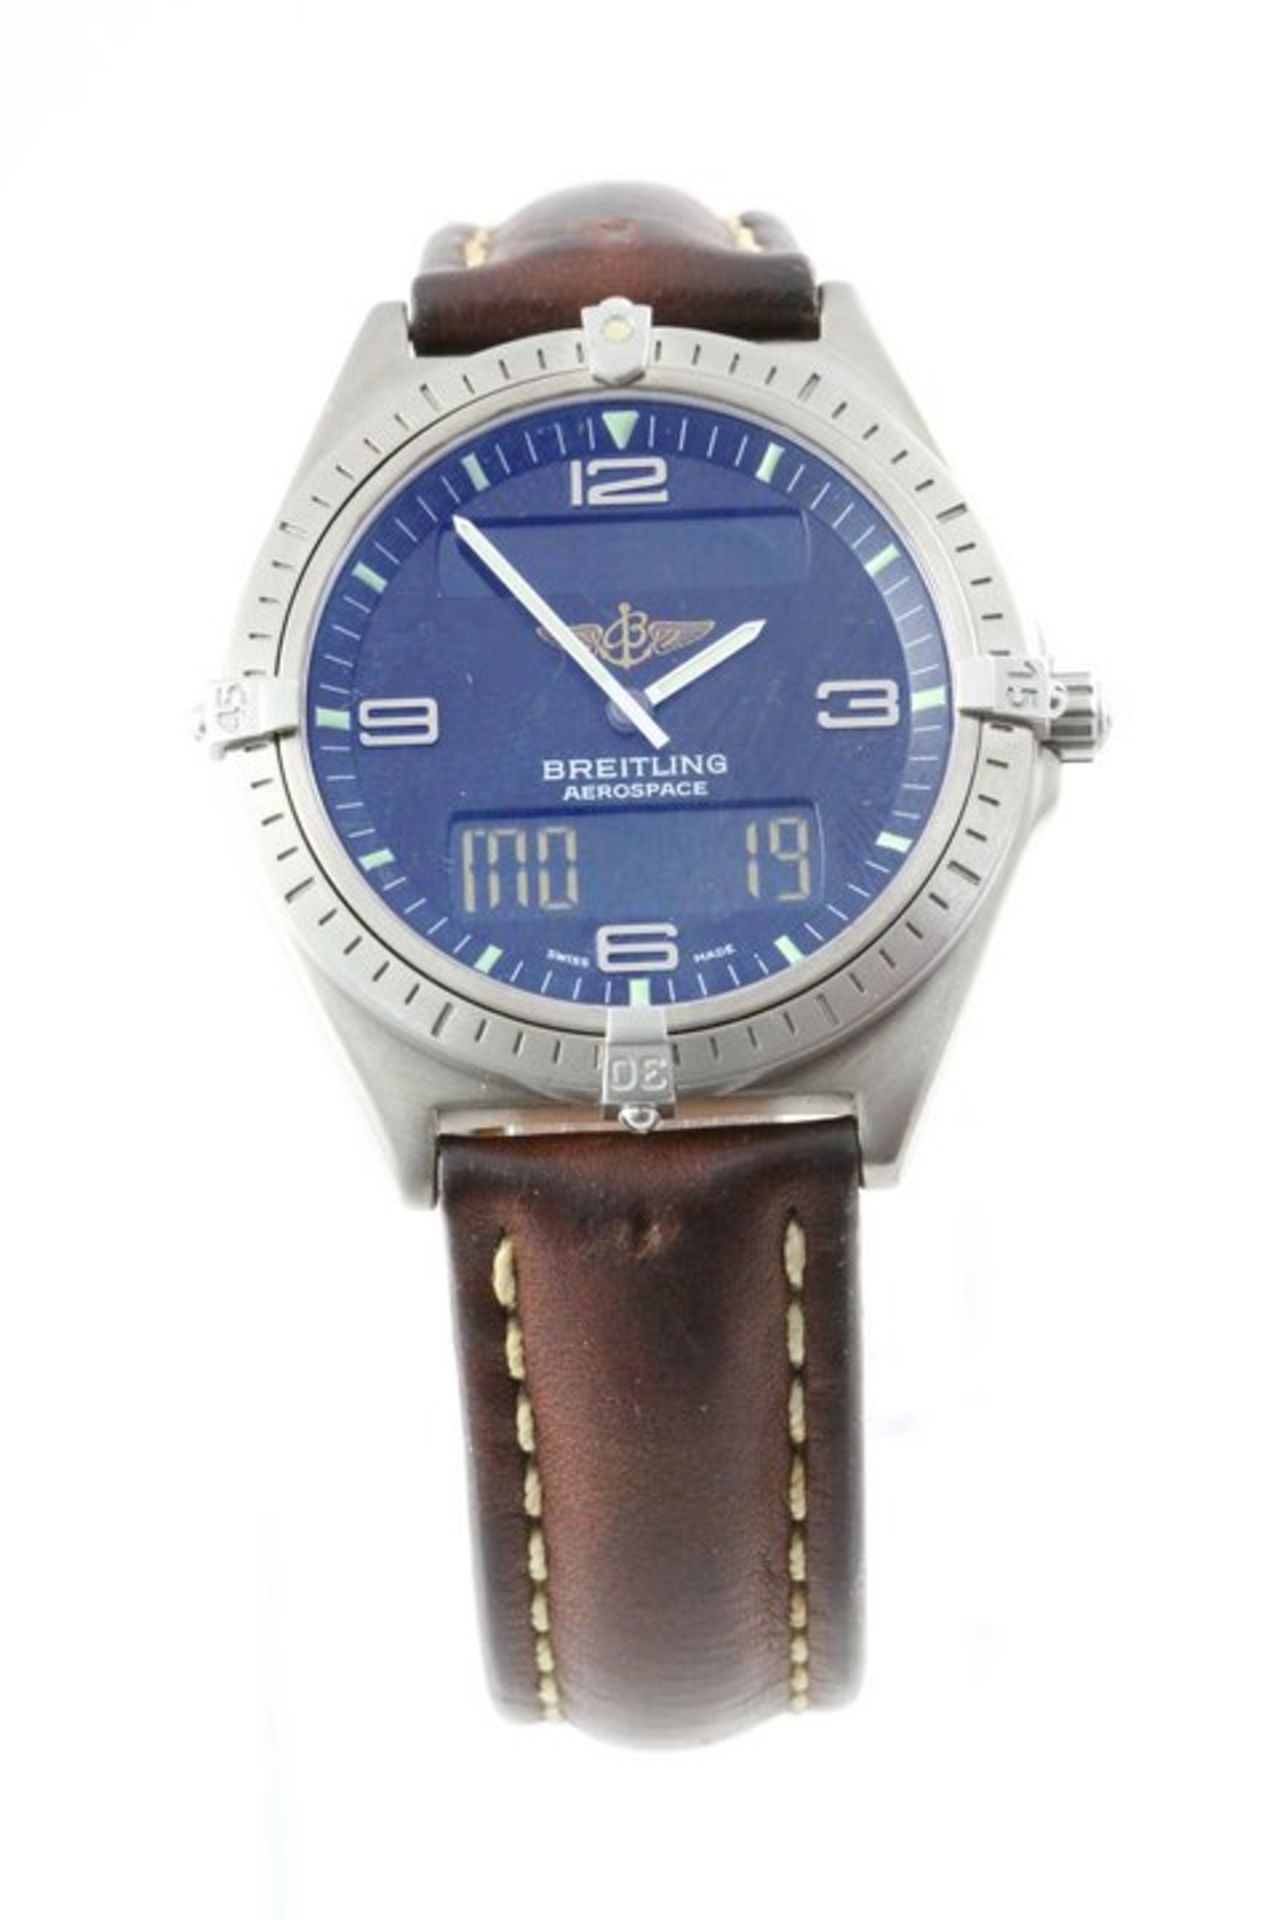 Breitling Aerospace Gents Titanium Watch - Image 2 of 8